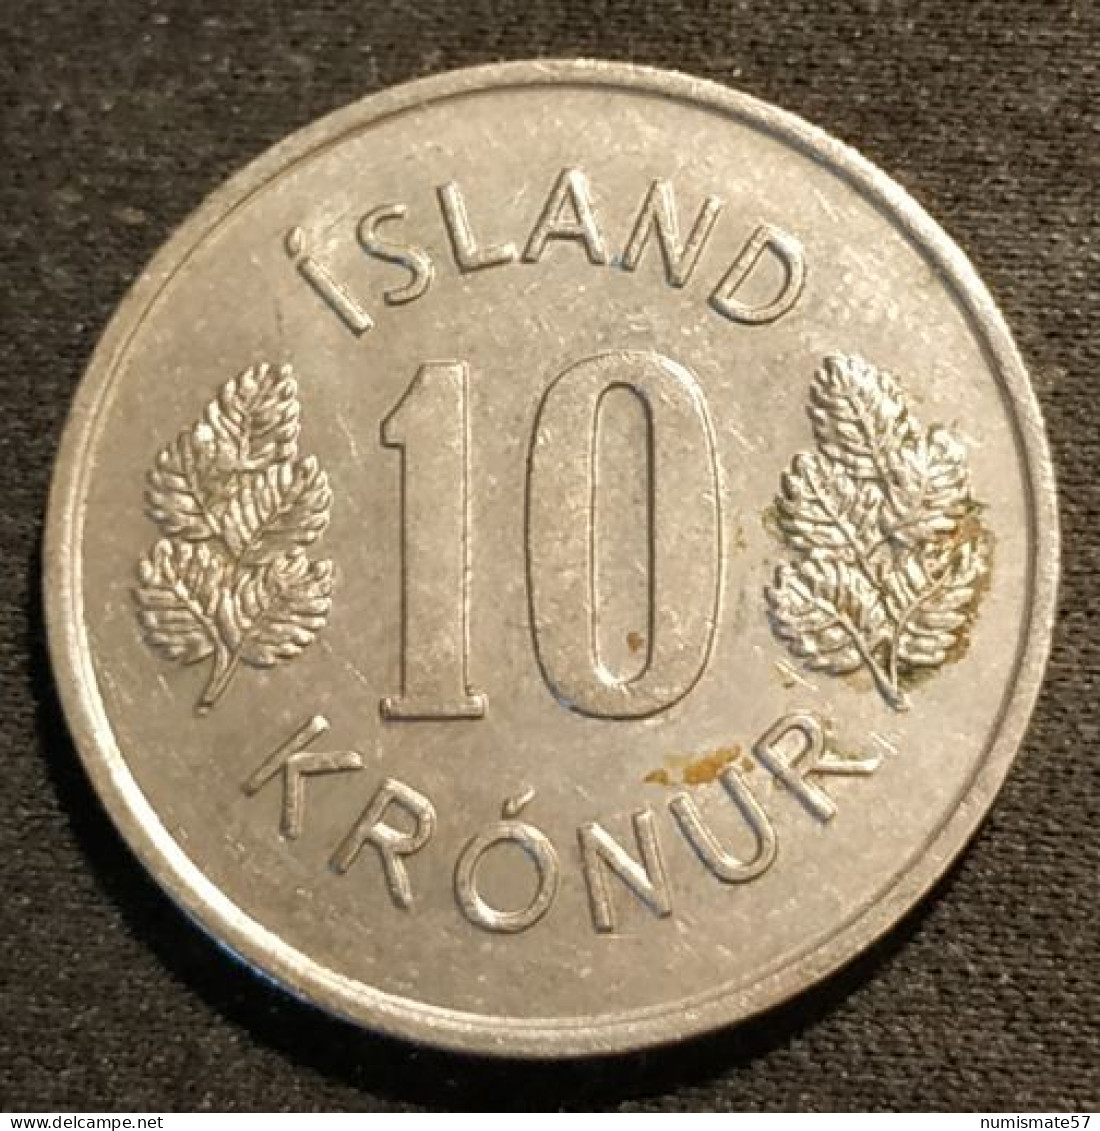 ISLANDE - ICELAND - 10 KRONUR 1975 - KM 15 - ISLAND - Island